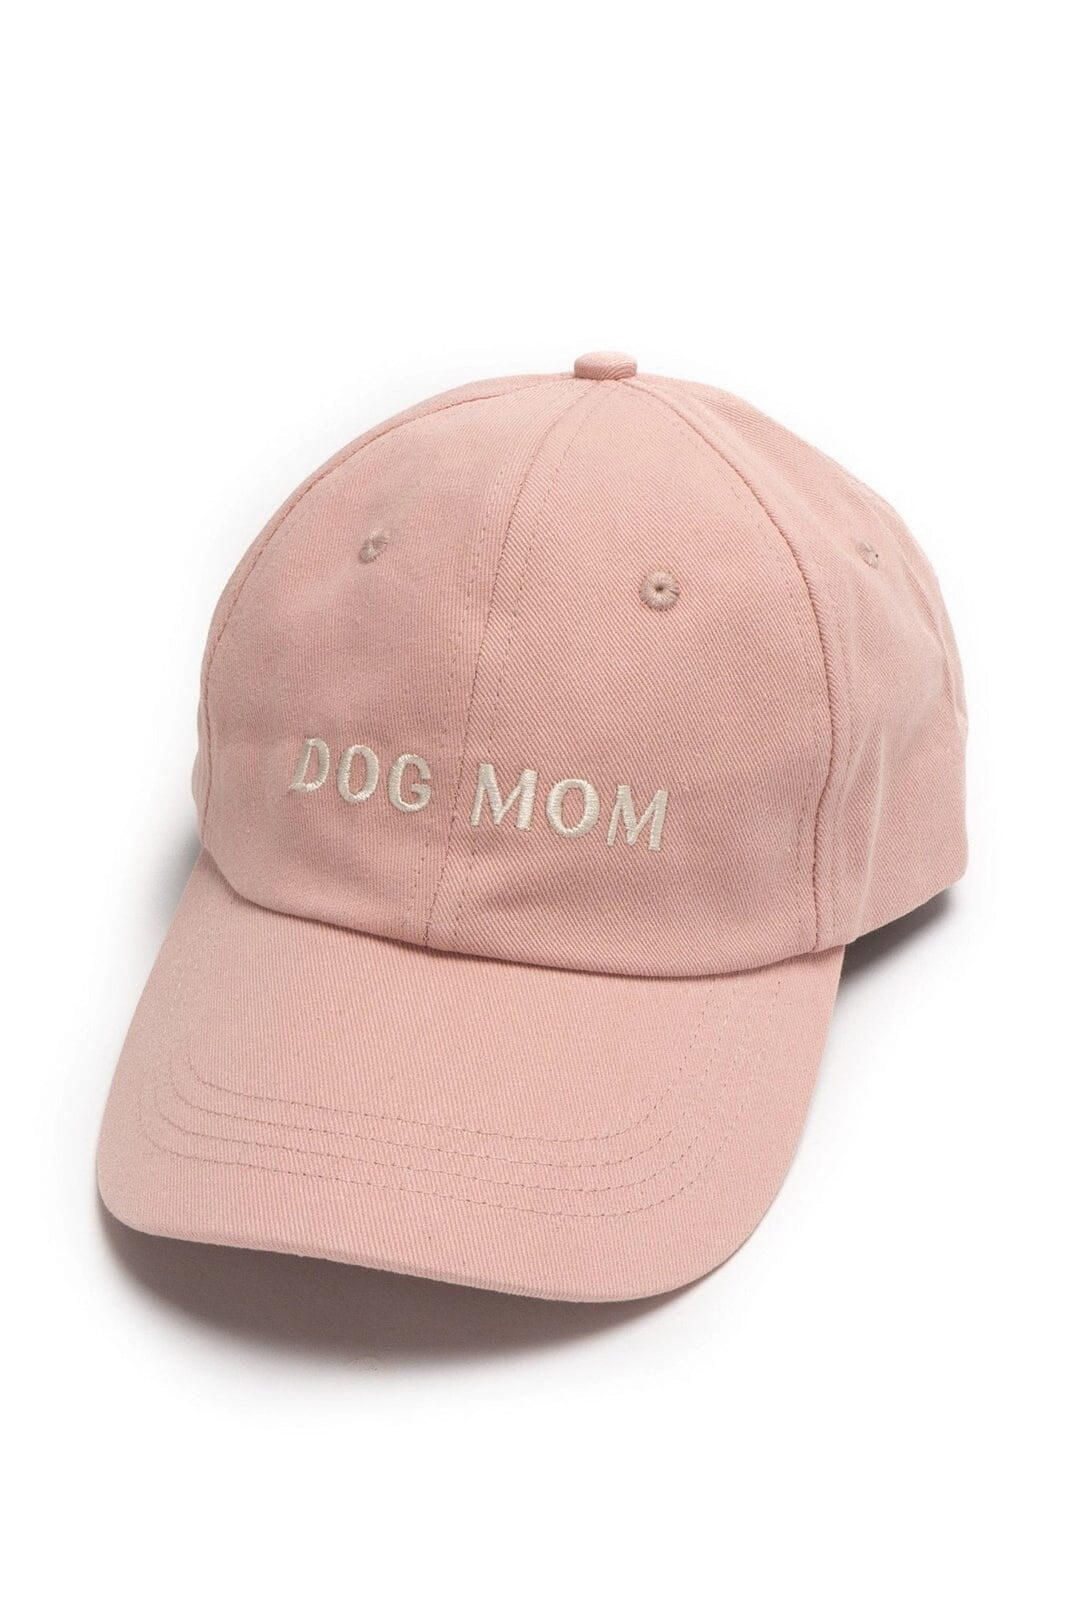 Dog Mom Hat - BLUSH - OS